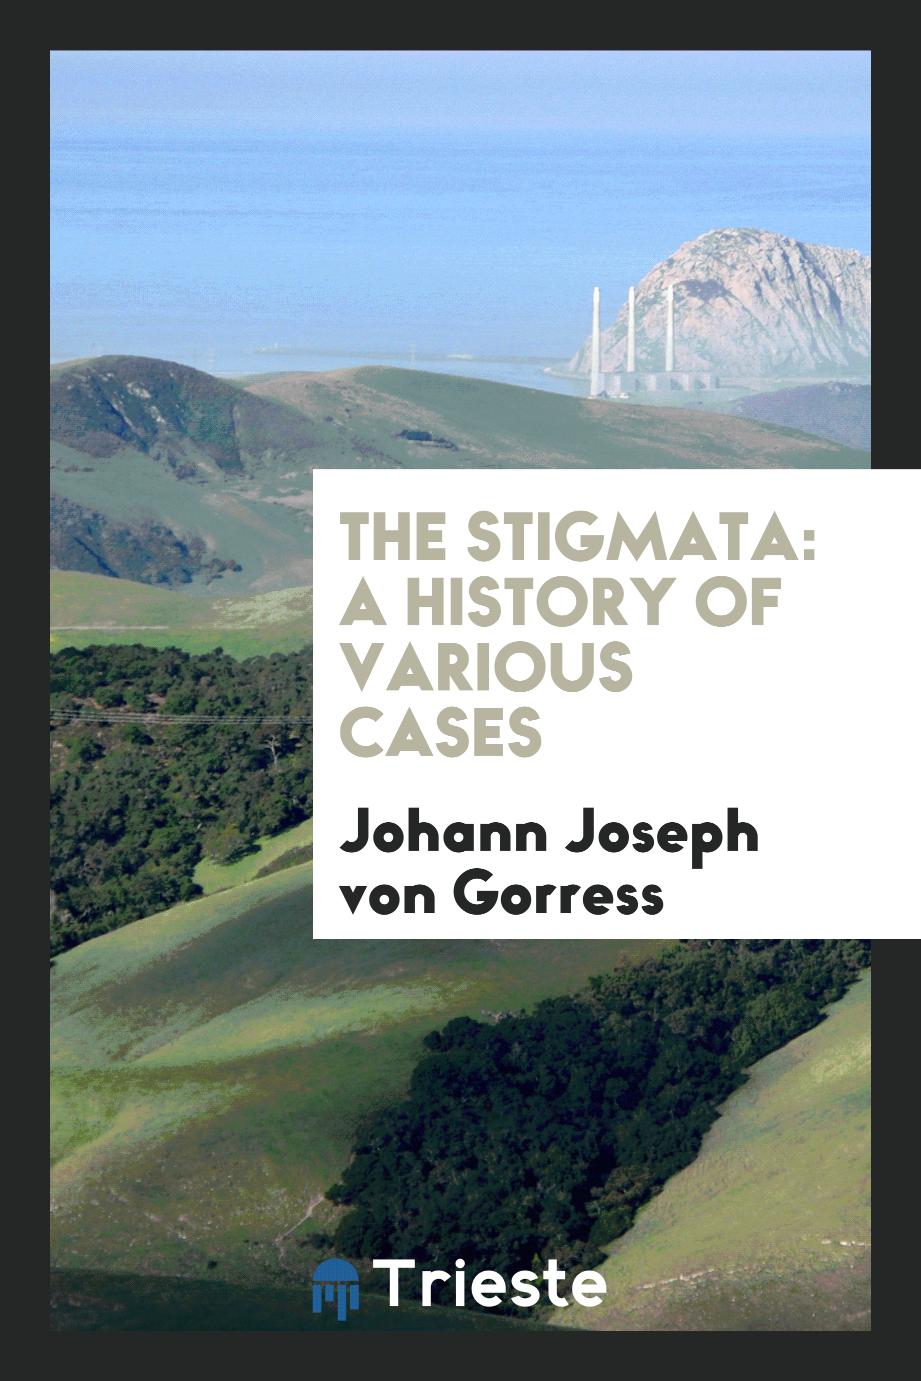 Johann Joseph von Gorress - The Stigmata: a history of various cases